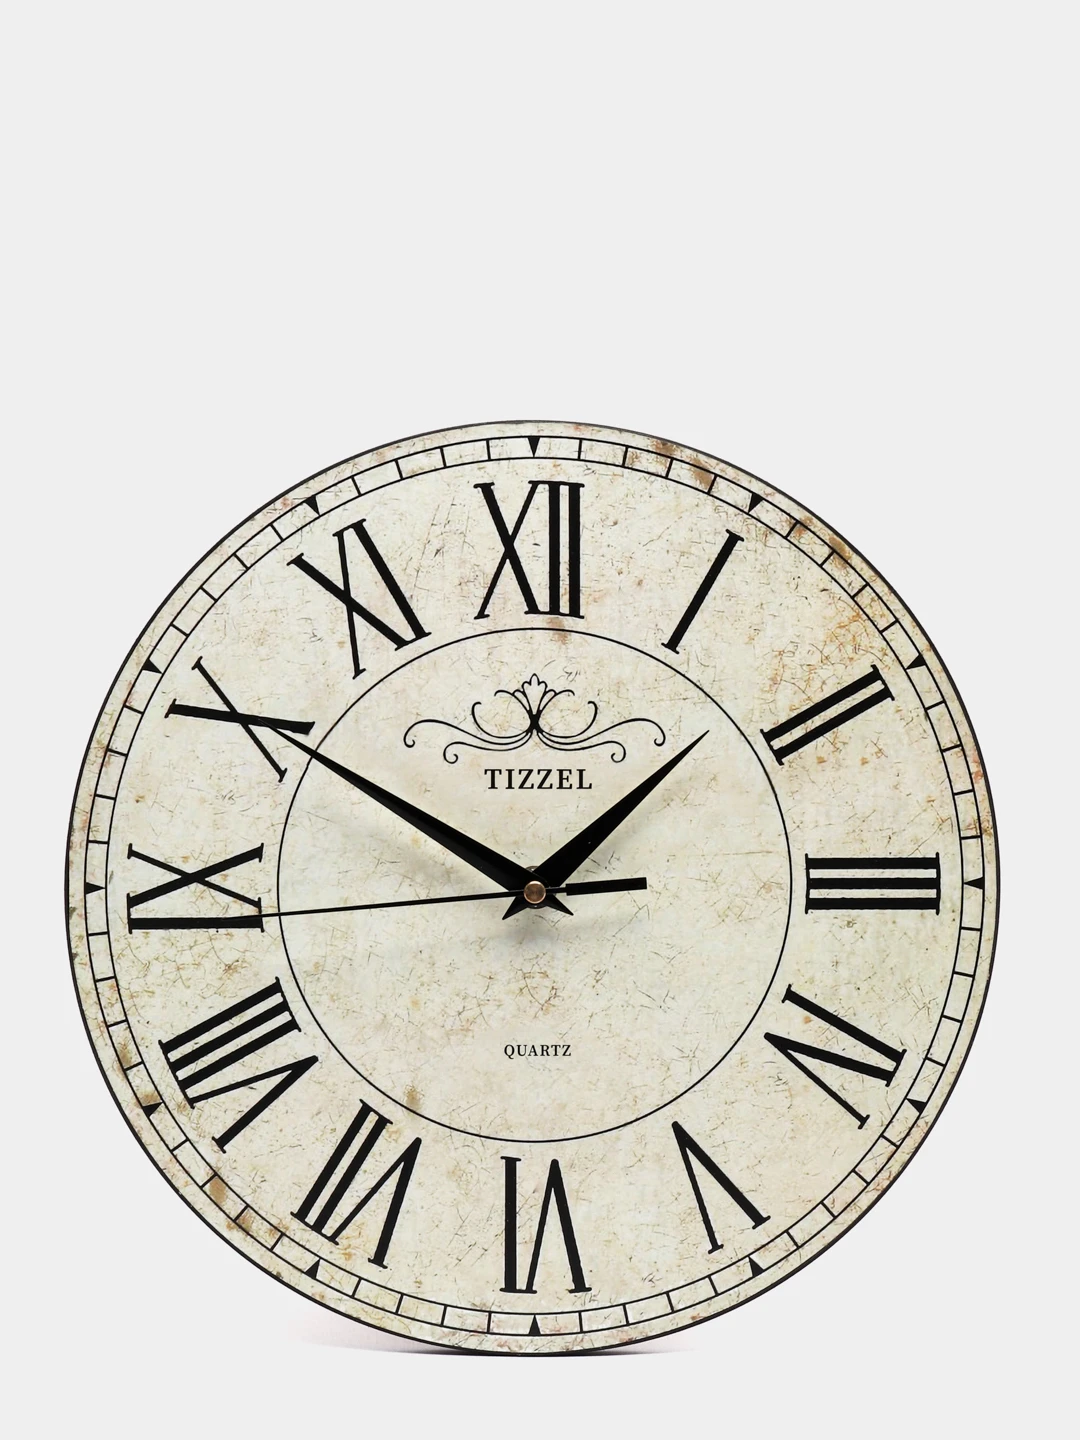 Часы декабрь 23. Настенные часы Leff lt10025. Часы с римским циферблатом. Часы с римским циферблатом настенные. Циферблат с римскими цифрами.